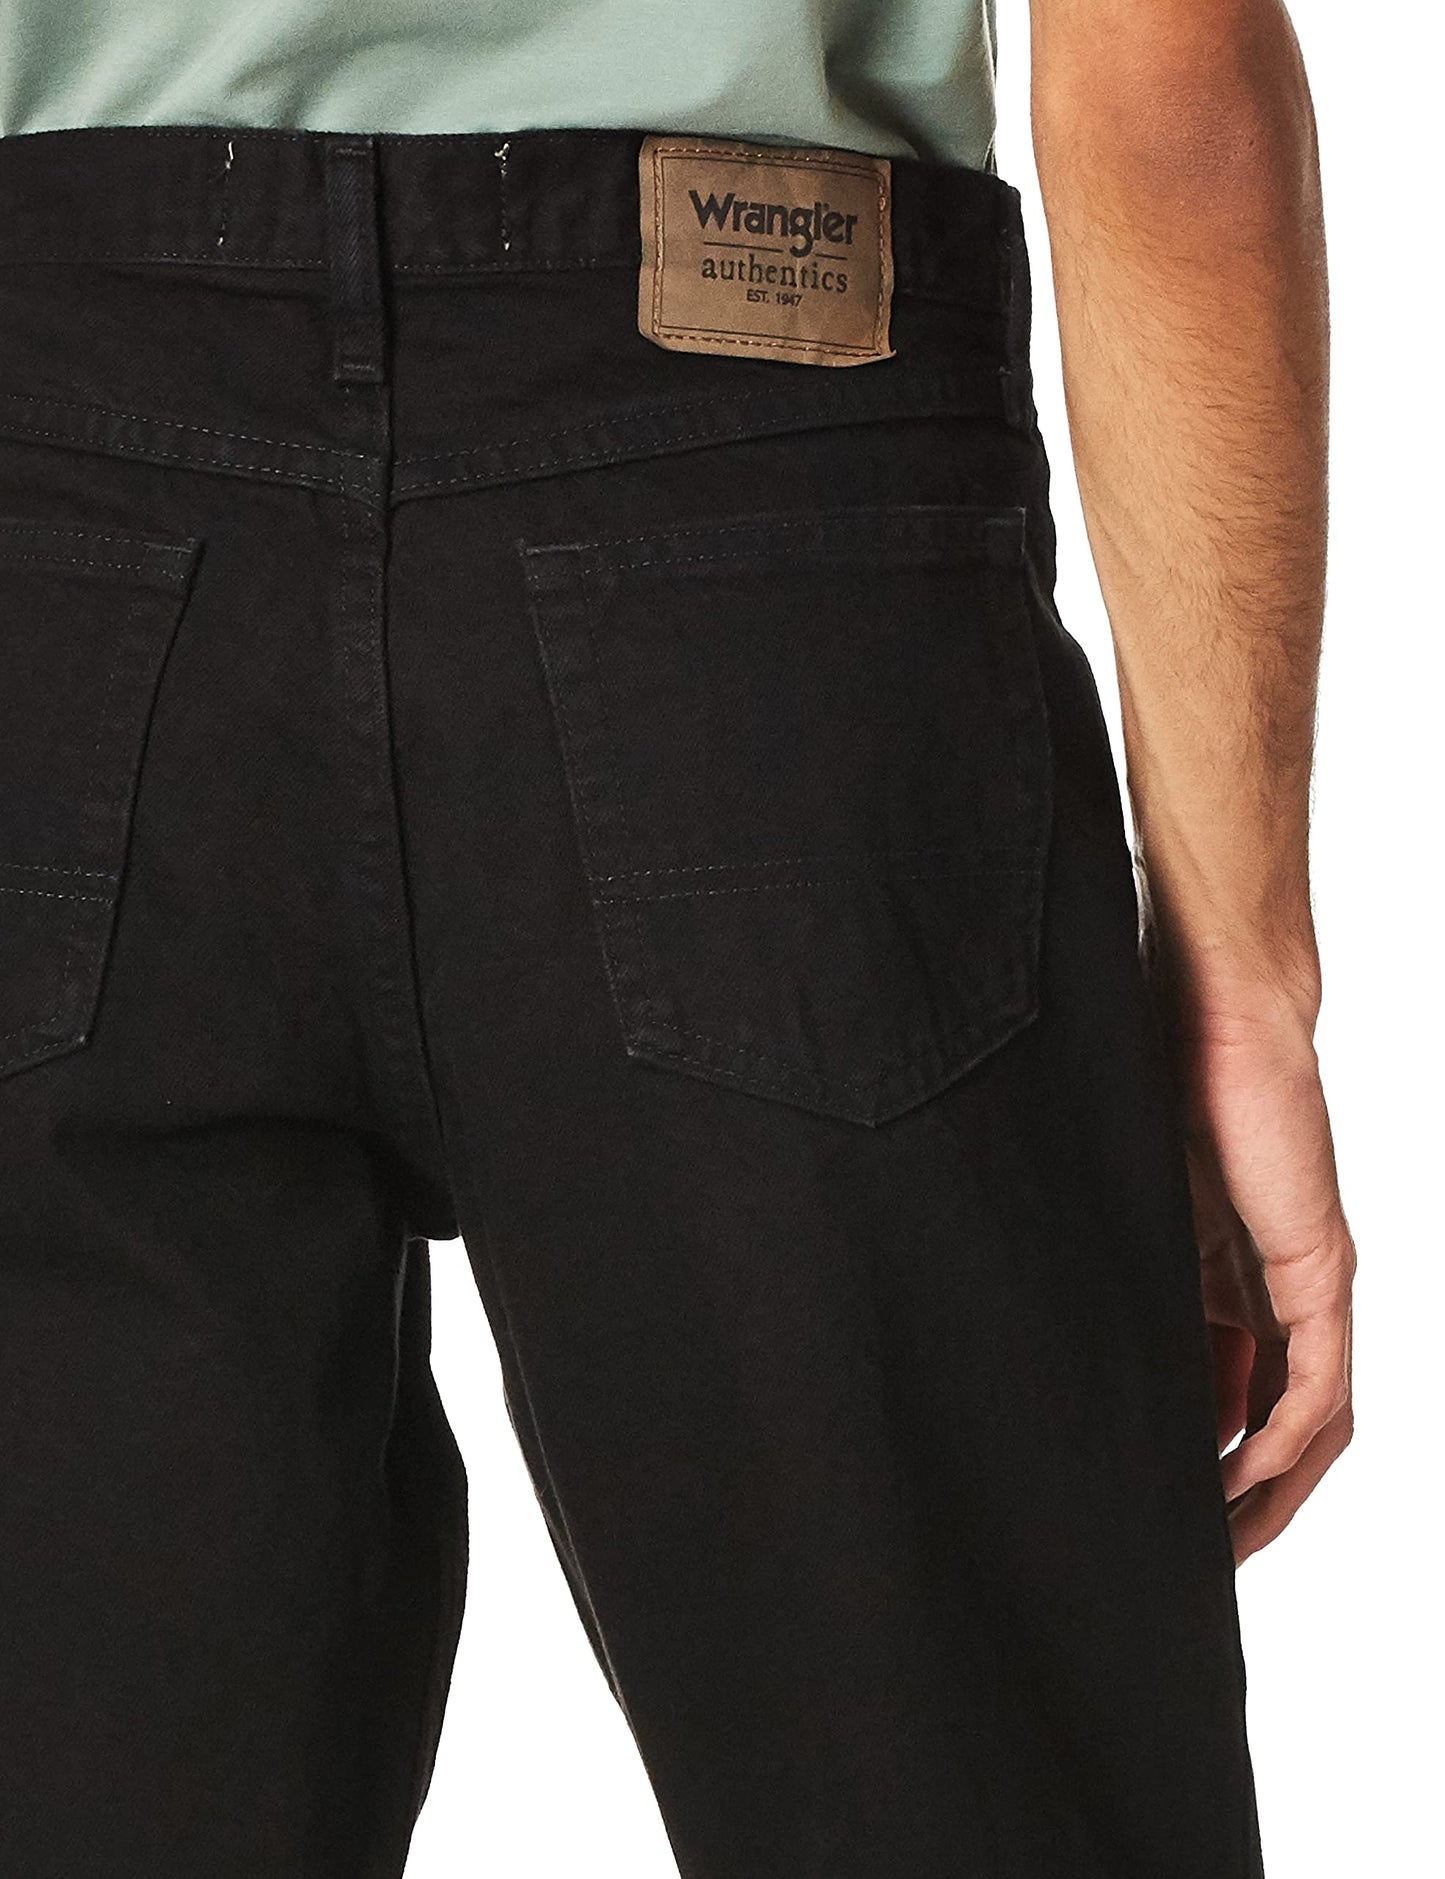 Wrangler Authentics Men's Classic 5-Pocket Relaxed Fit Cotton Jean, Black, 40W x 32L